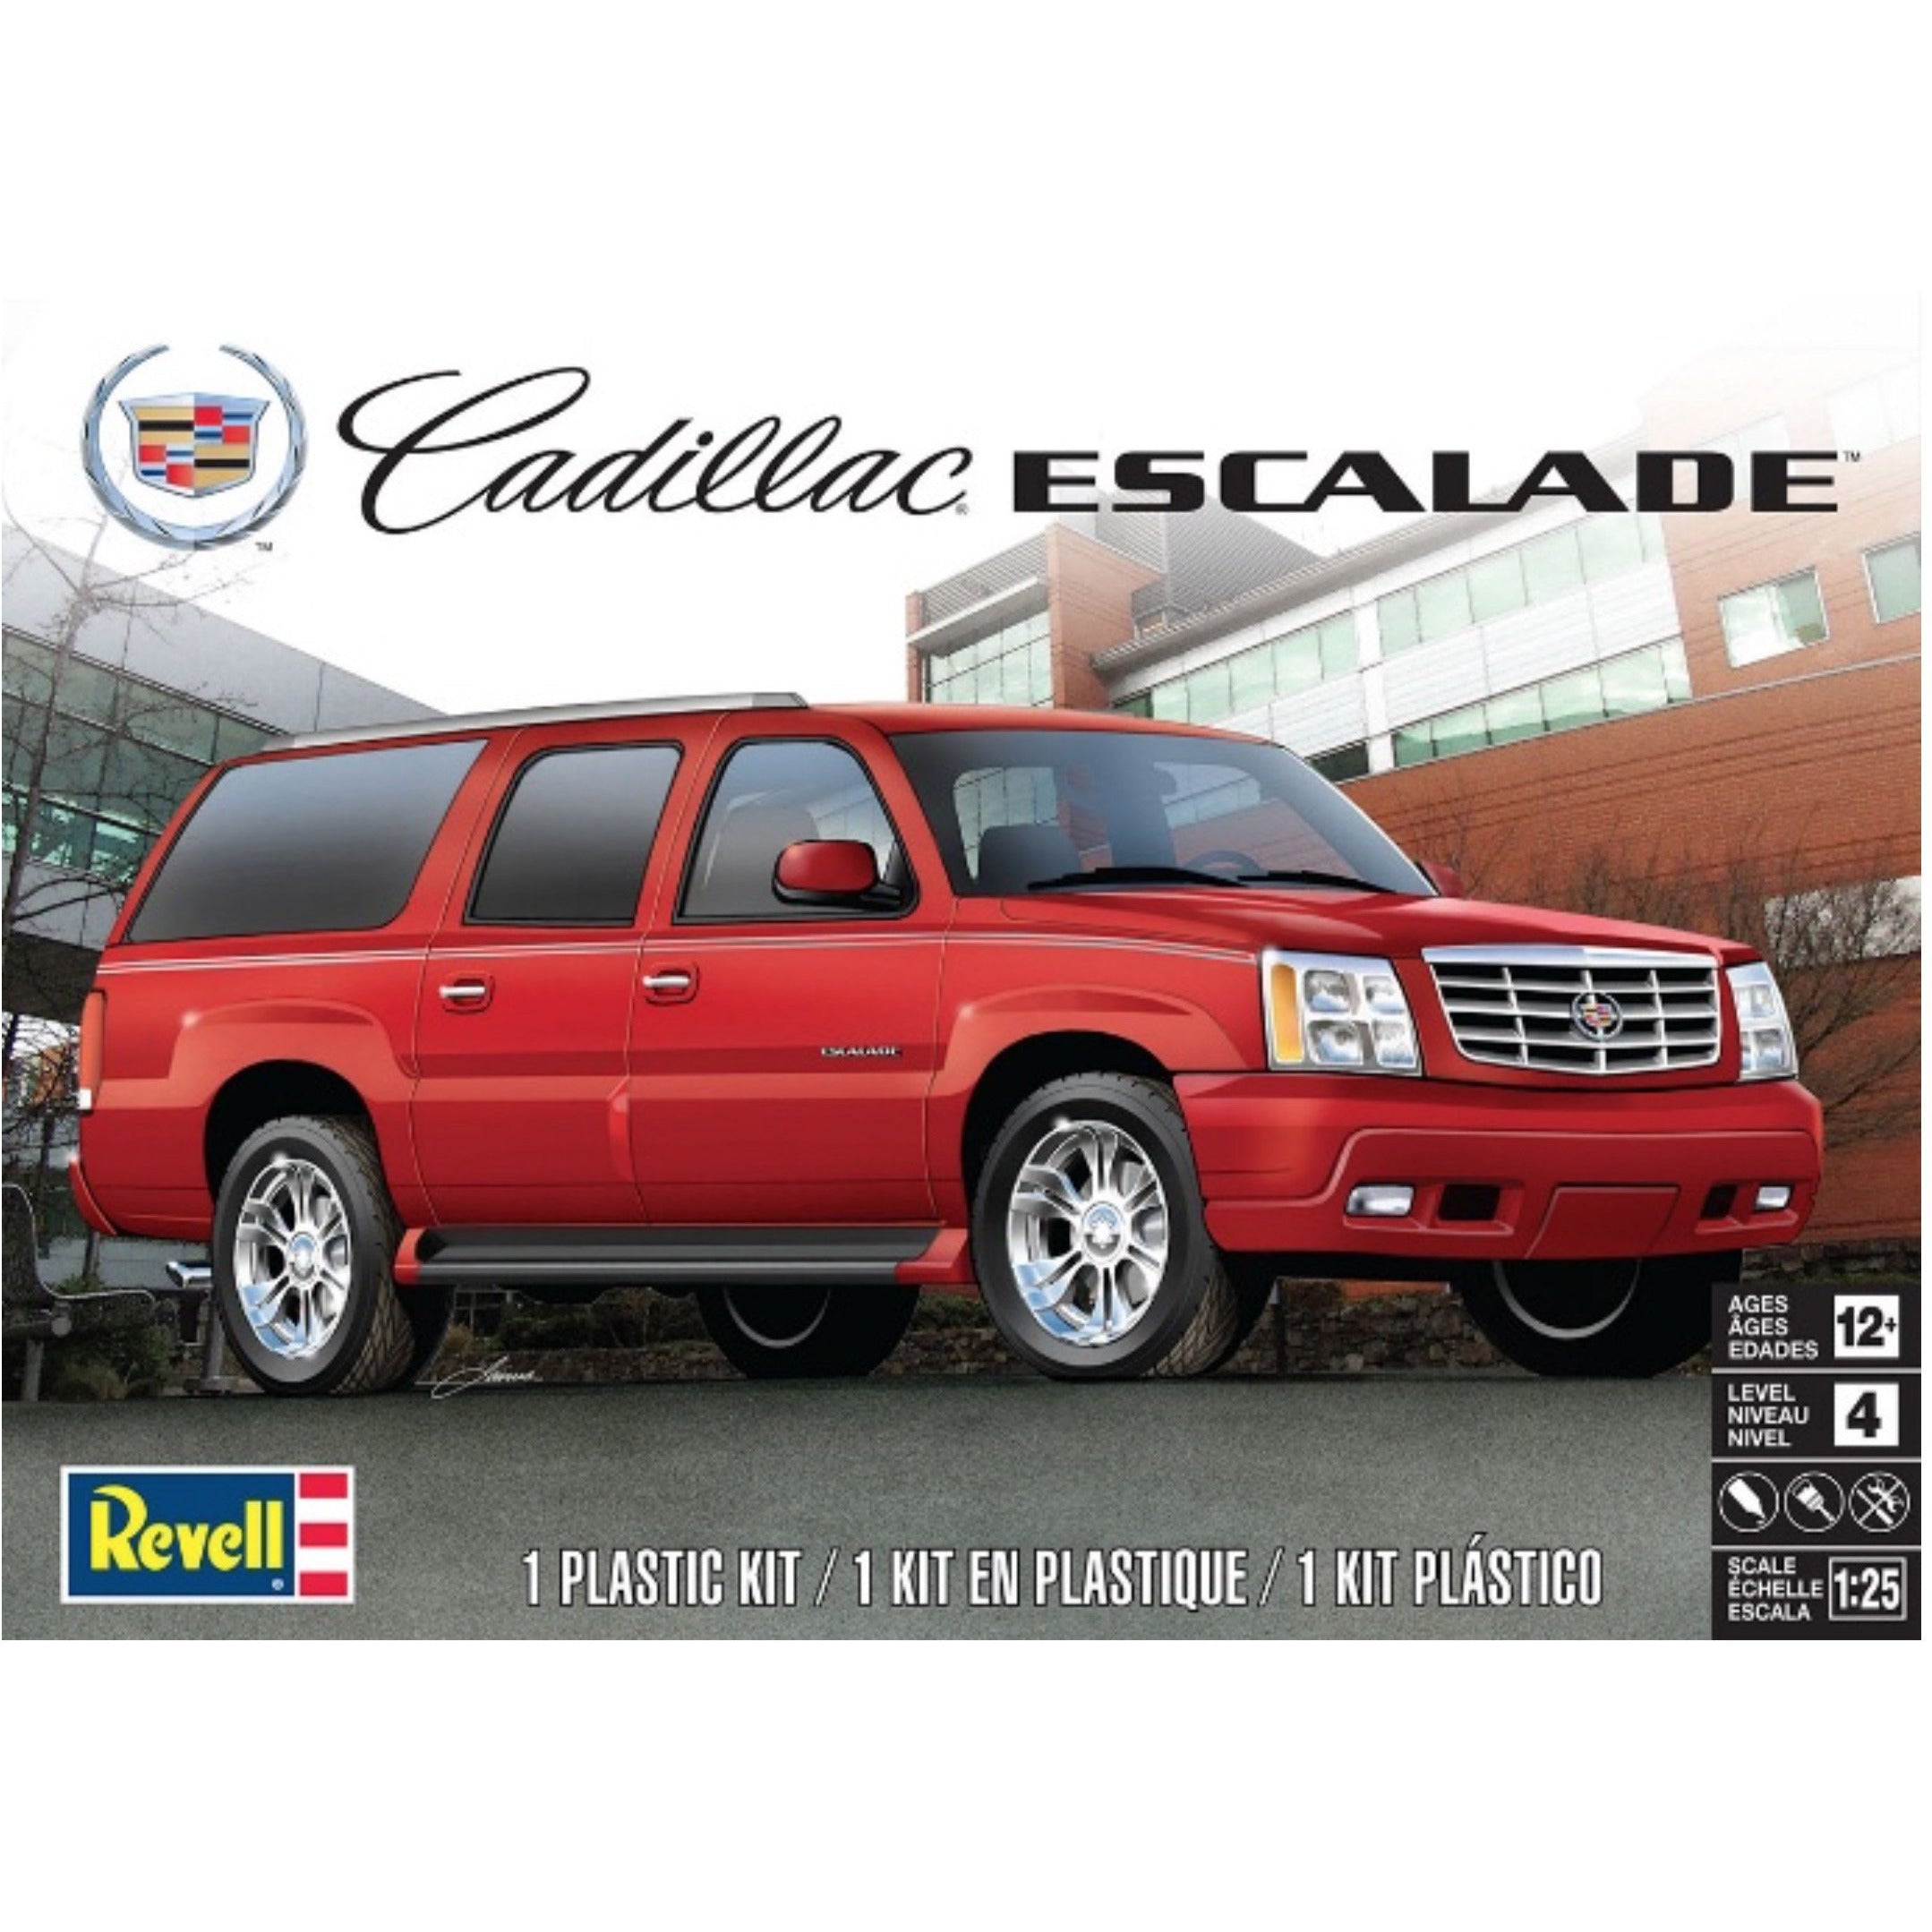 2003 Cadillac Escalade 1/25 by Revell